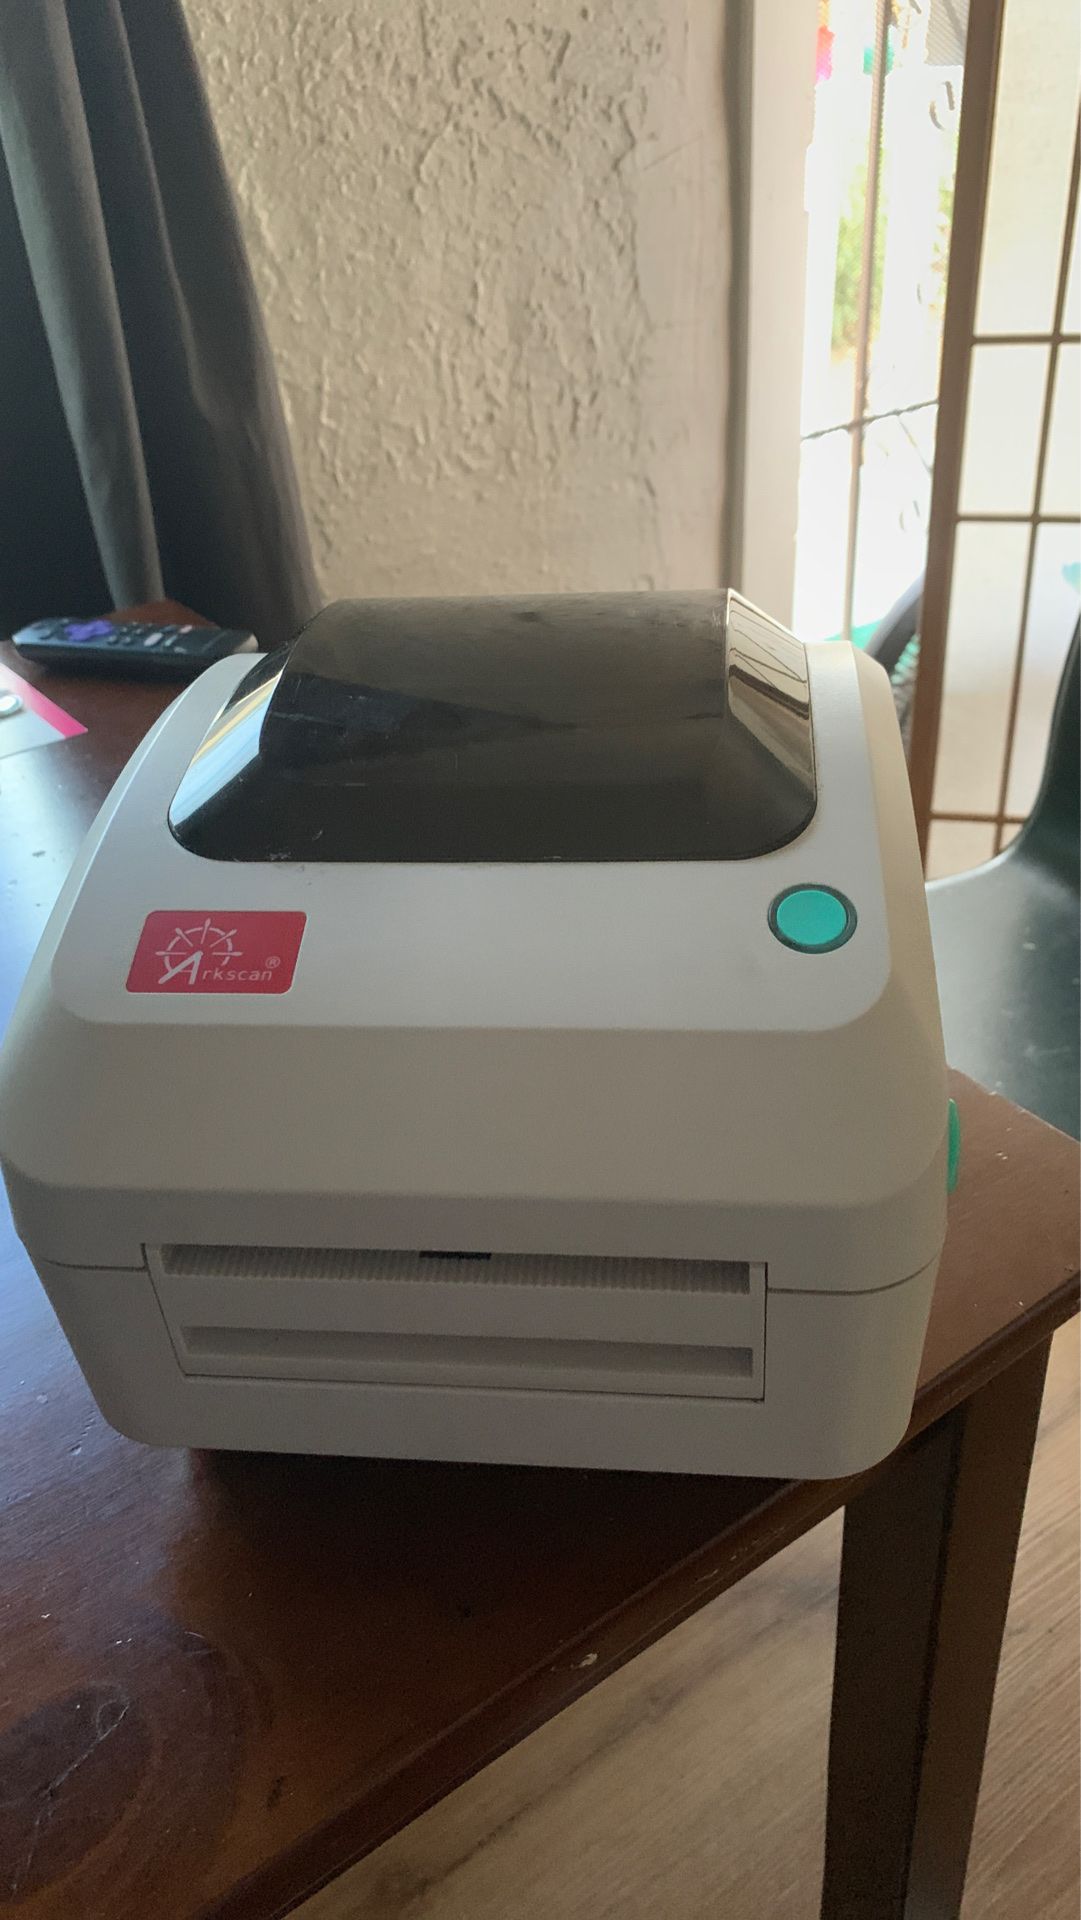 Arkscan thermal label printer